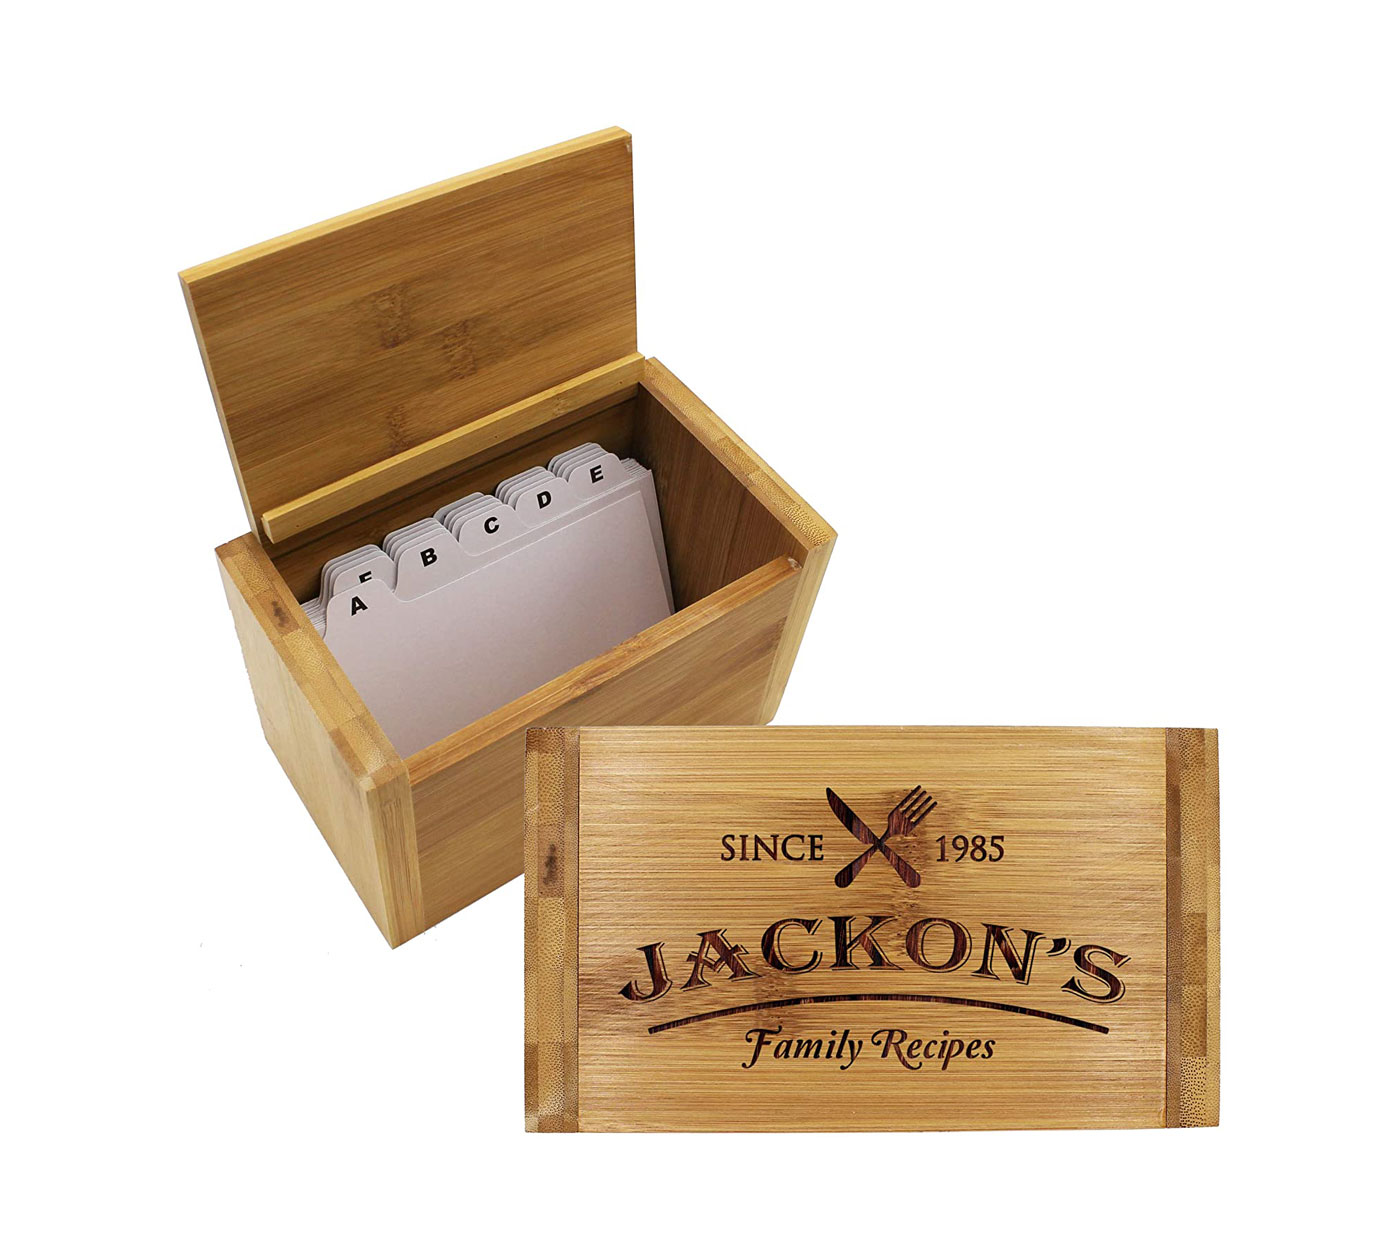 Customized Bamboo Wood Recipe Box Holder - Custom Personalized Family Recipe Boxes Gift for Kitchen, Home Decor, Wedding, Housewarming, Couples